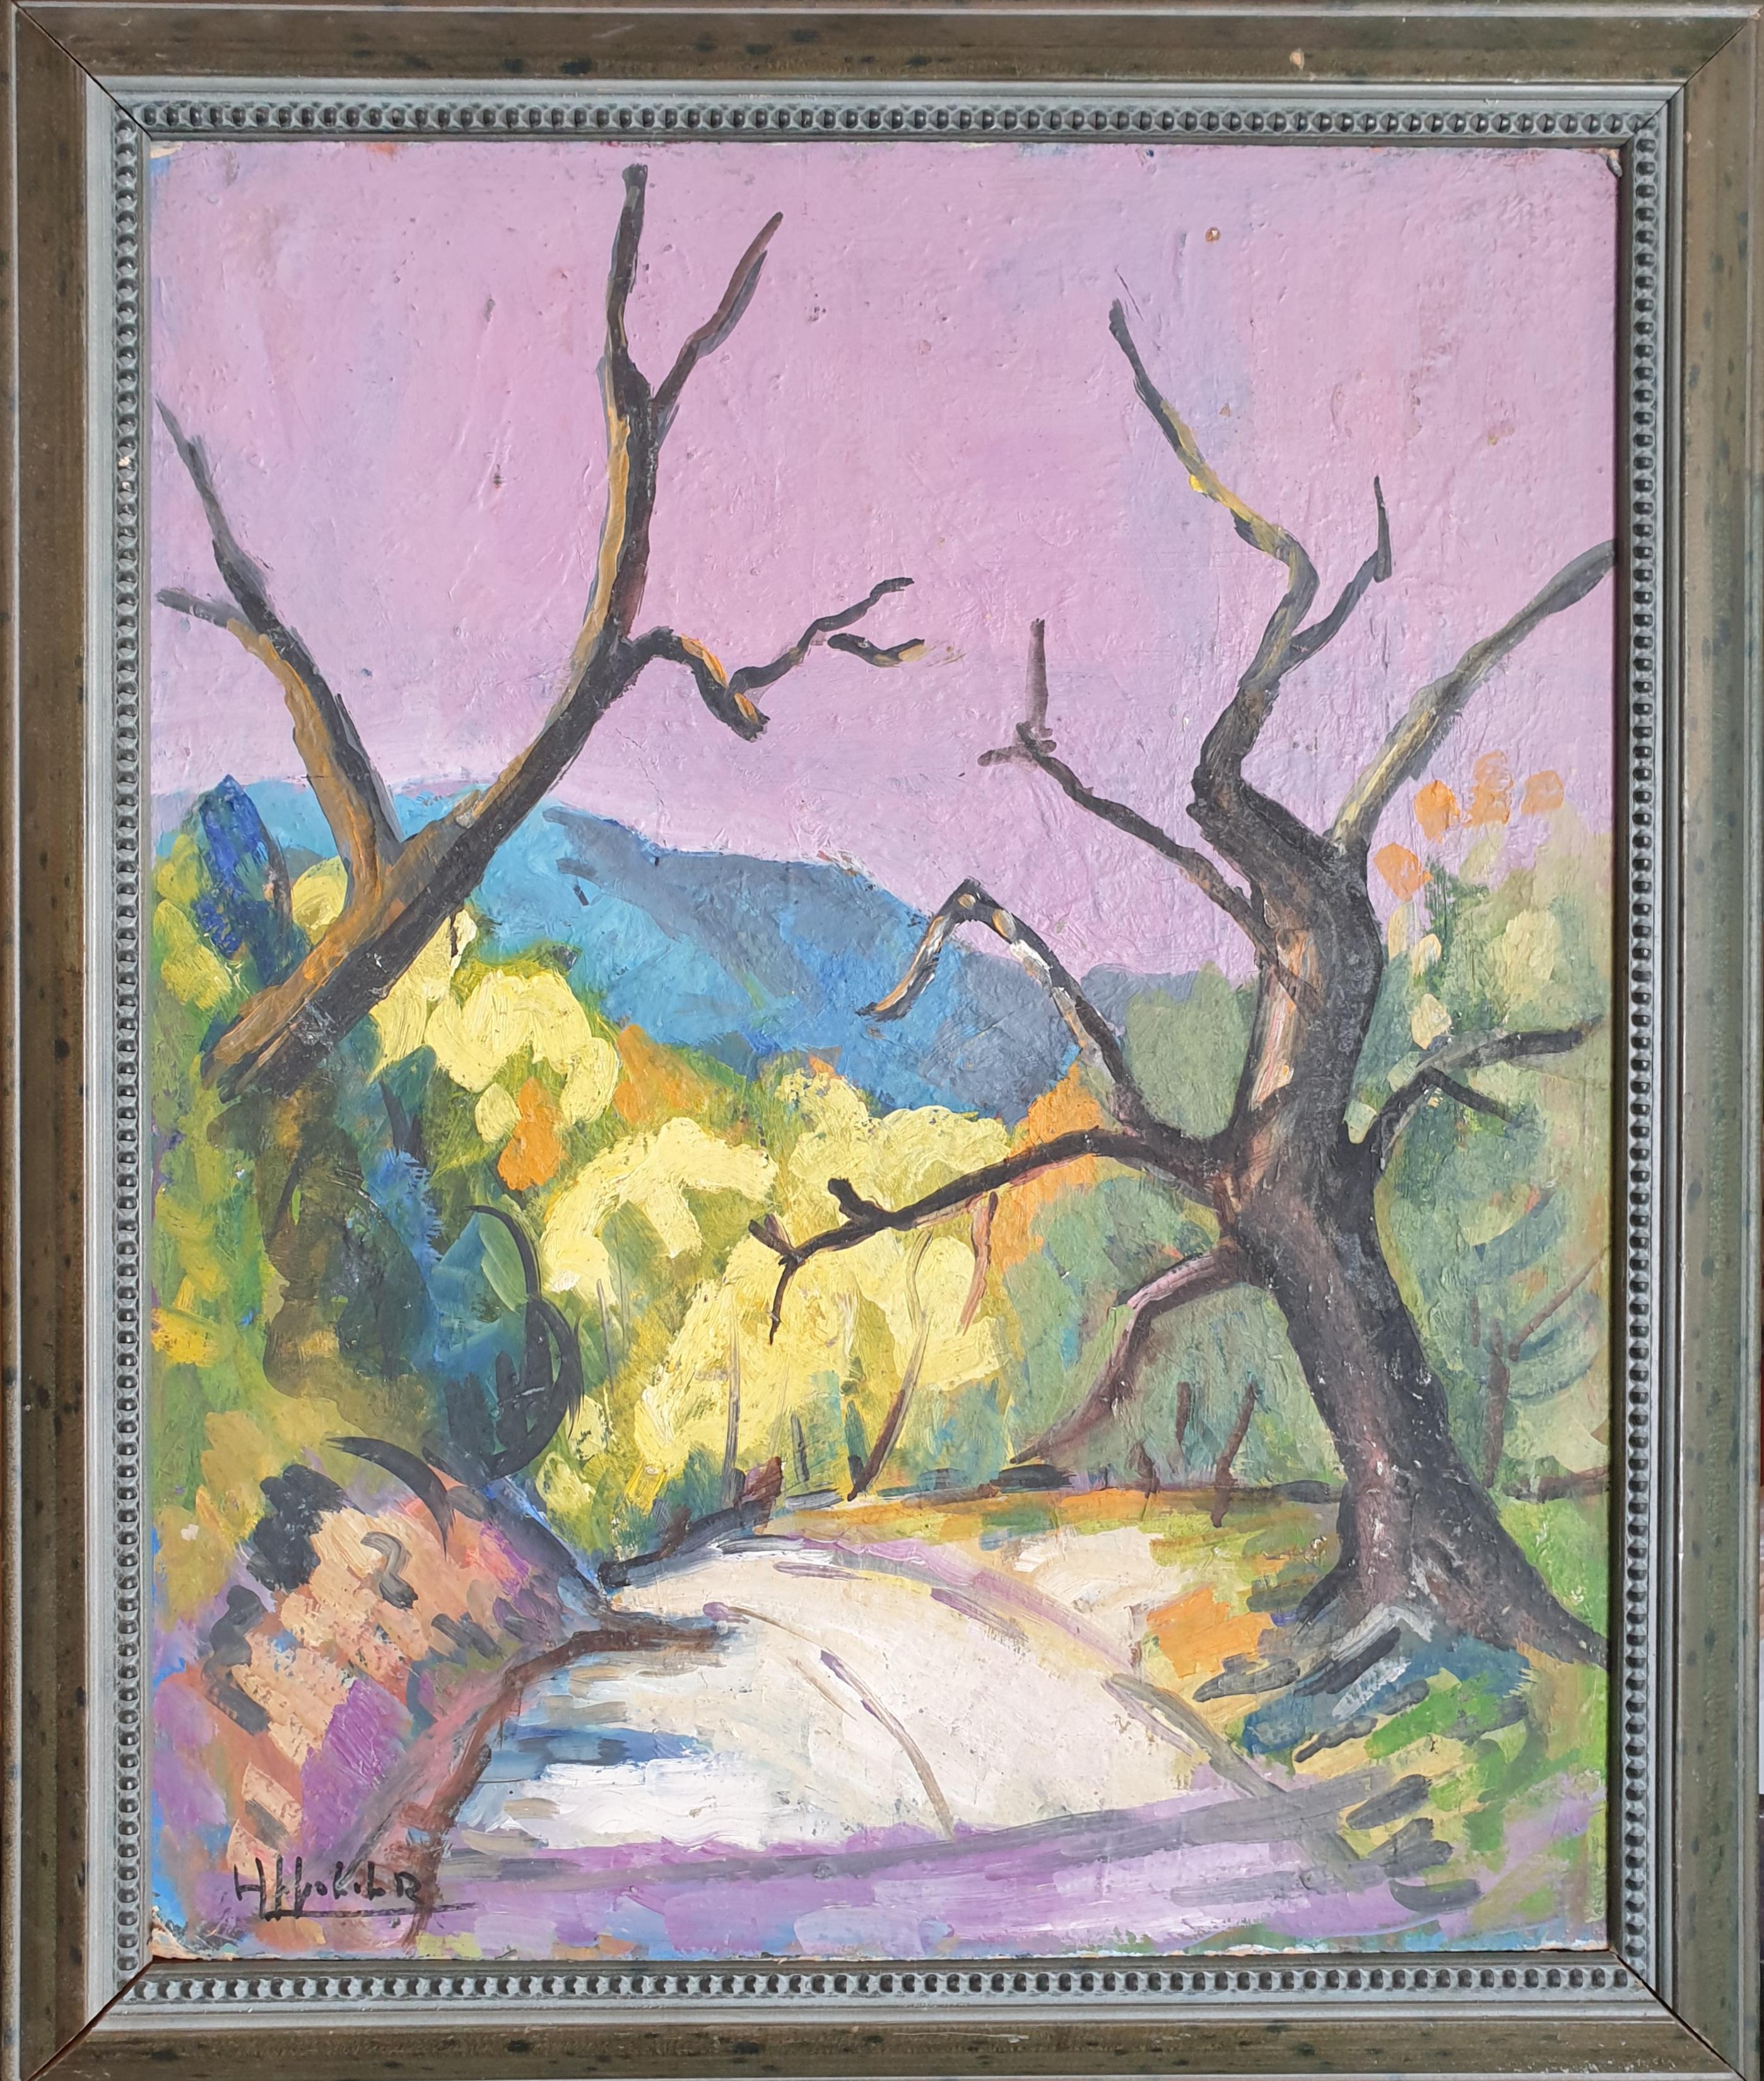 Hyppolite Roger Figurative Painting - The Road, Mid-century Provençal, Fauvist Landscape. Oil on Board.